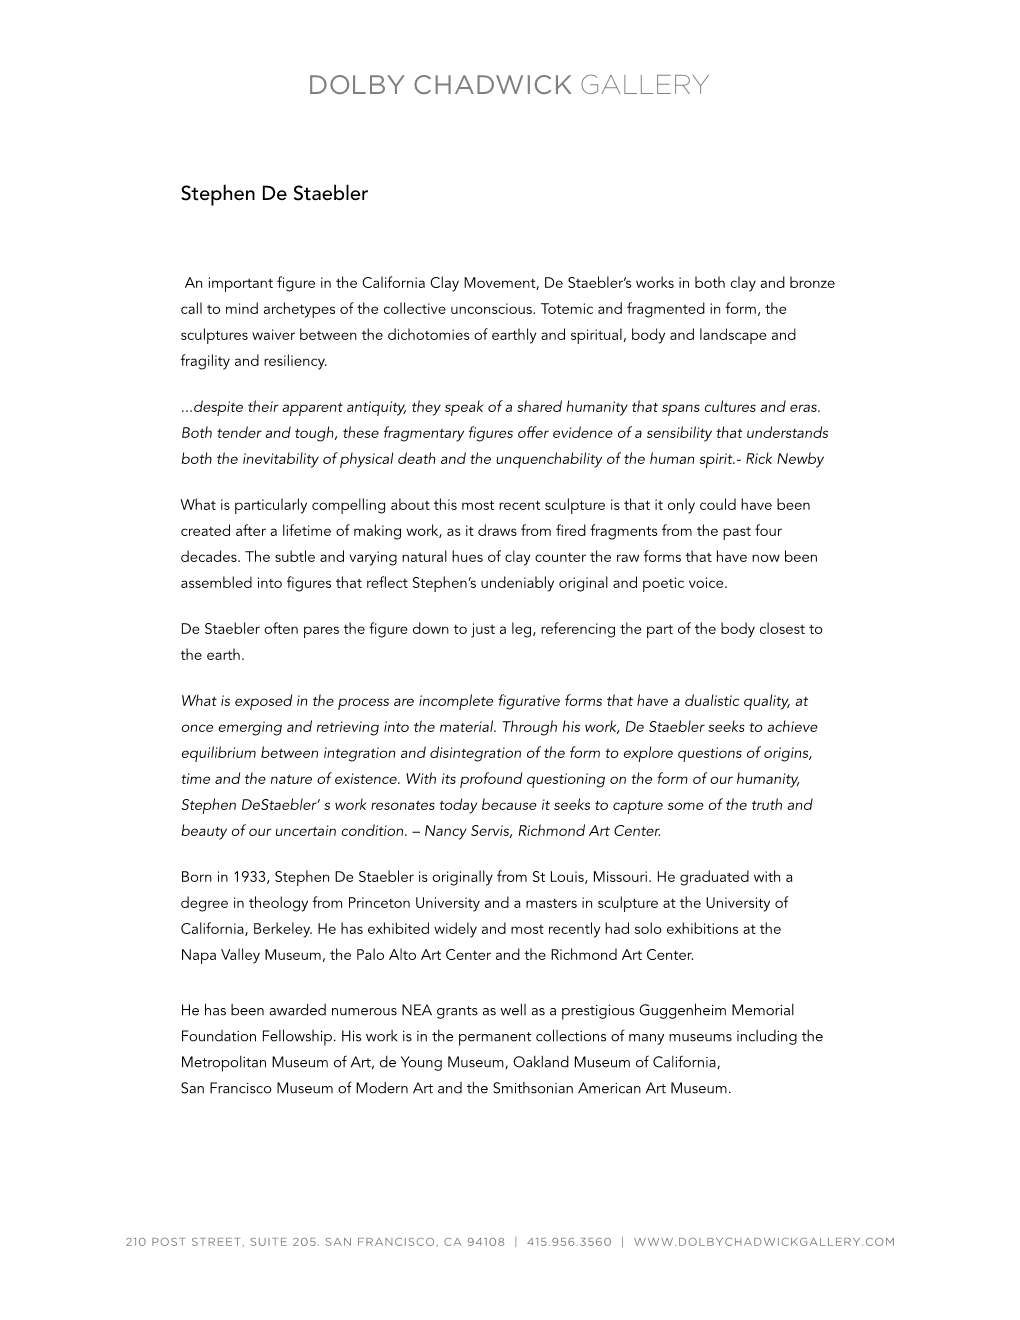 De Staebler Resume + Statement 2013